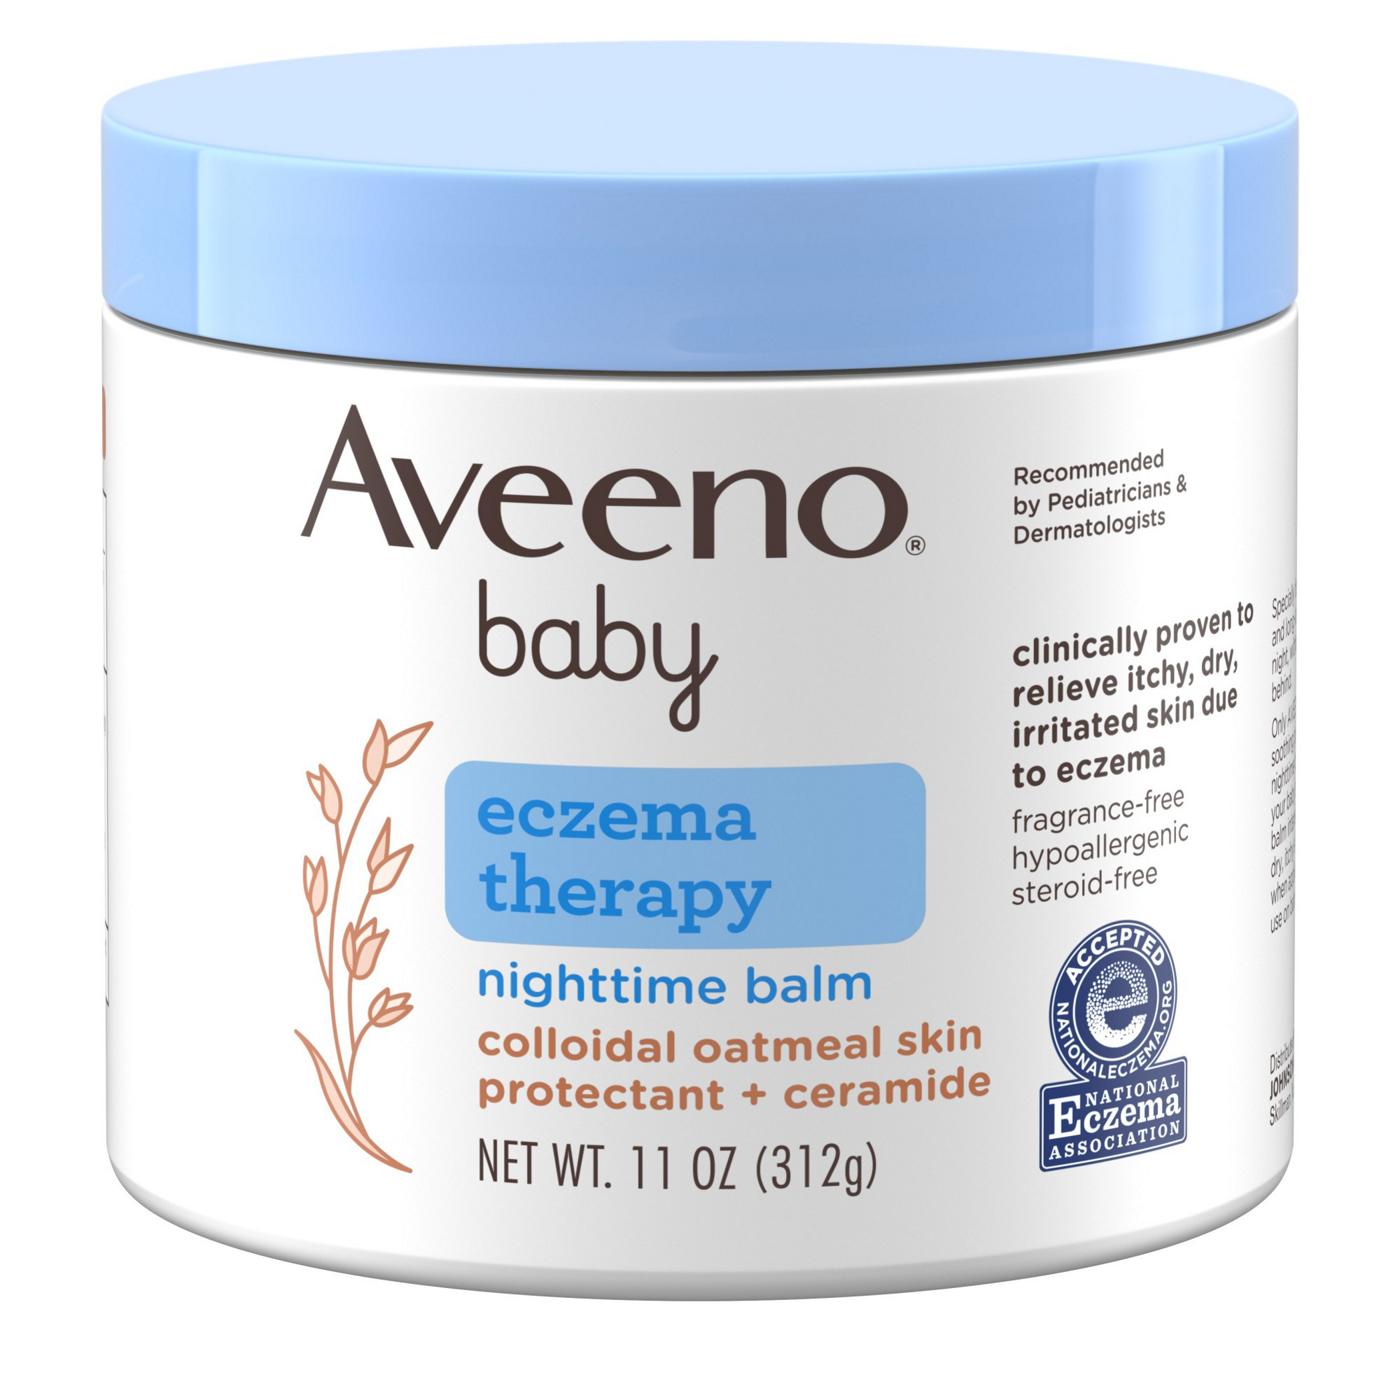 Aveeno Baby Eczema Therapy Nighttime Balm; image 1 of 6